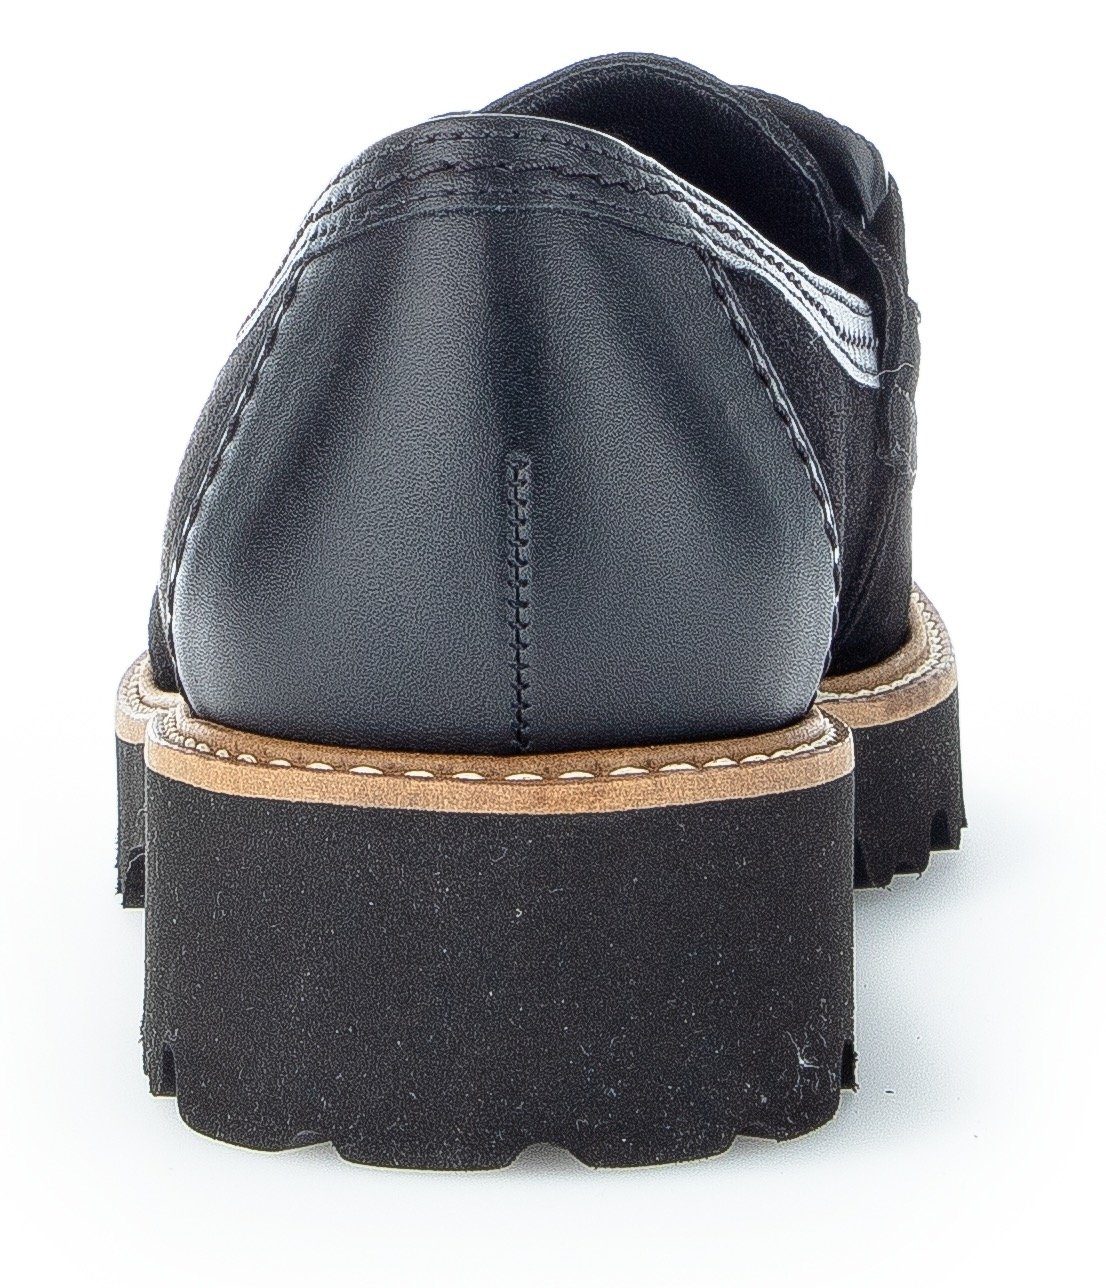 Slipper Gabor mit Leder-Innensohle schwarz hochwertiger